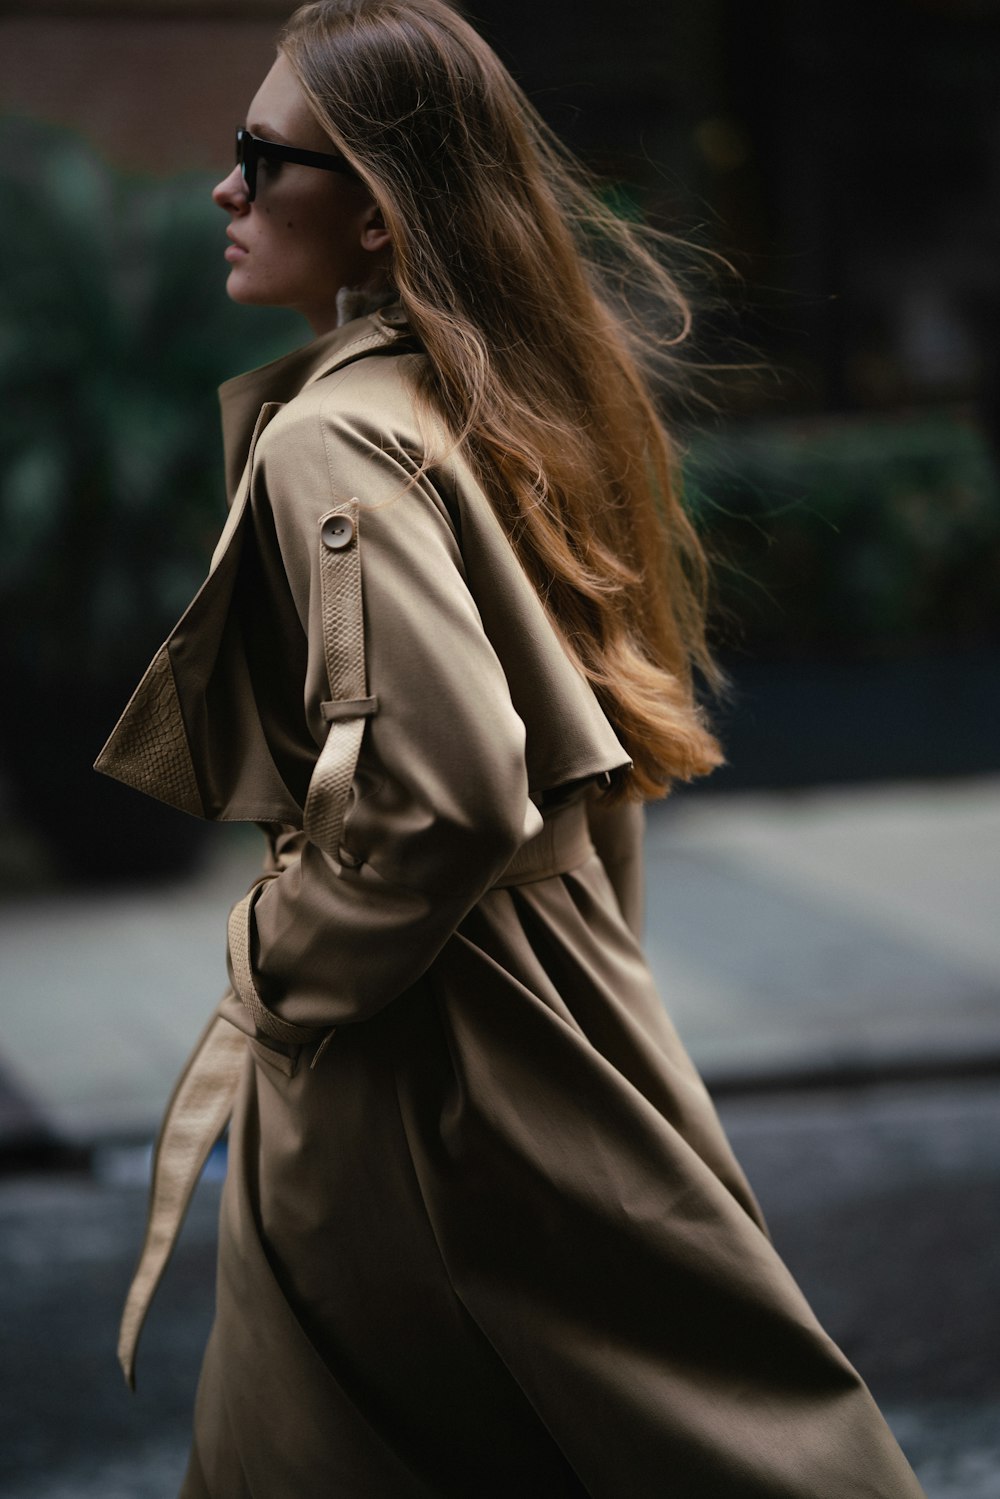 Une femme marchant dans la rue en trench-coat